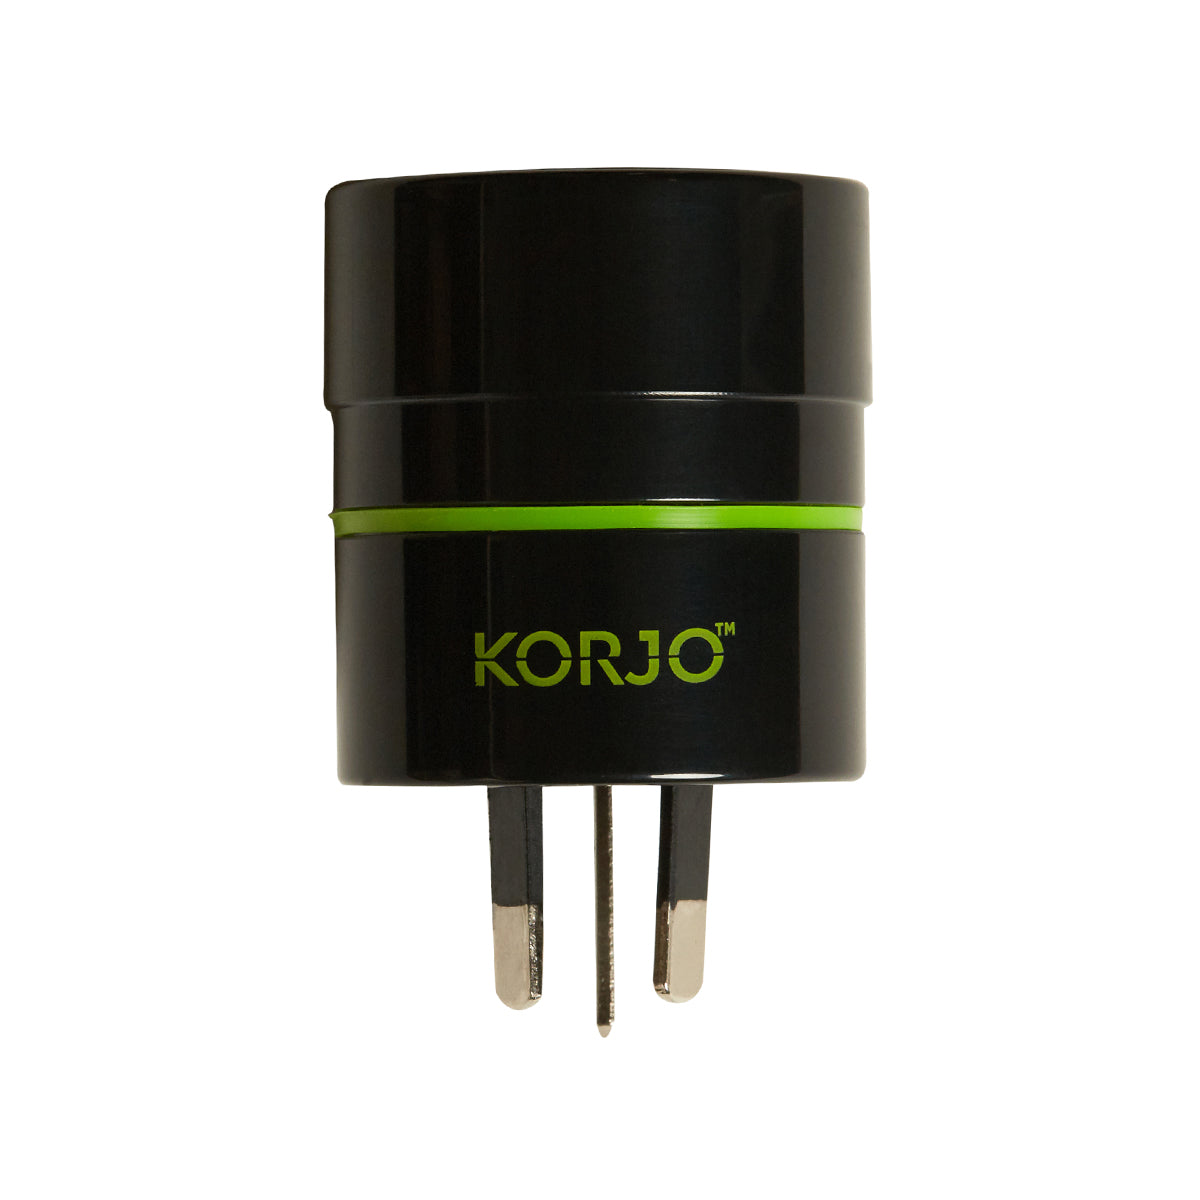 Korjo Travel Adaptor For Australia From Europe & USA